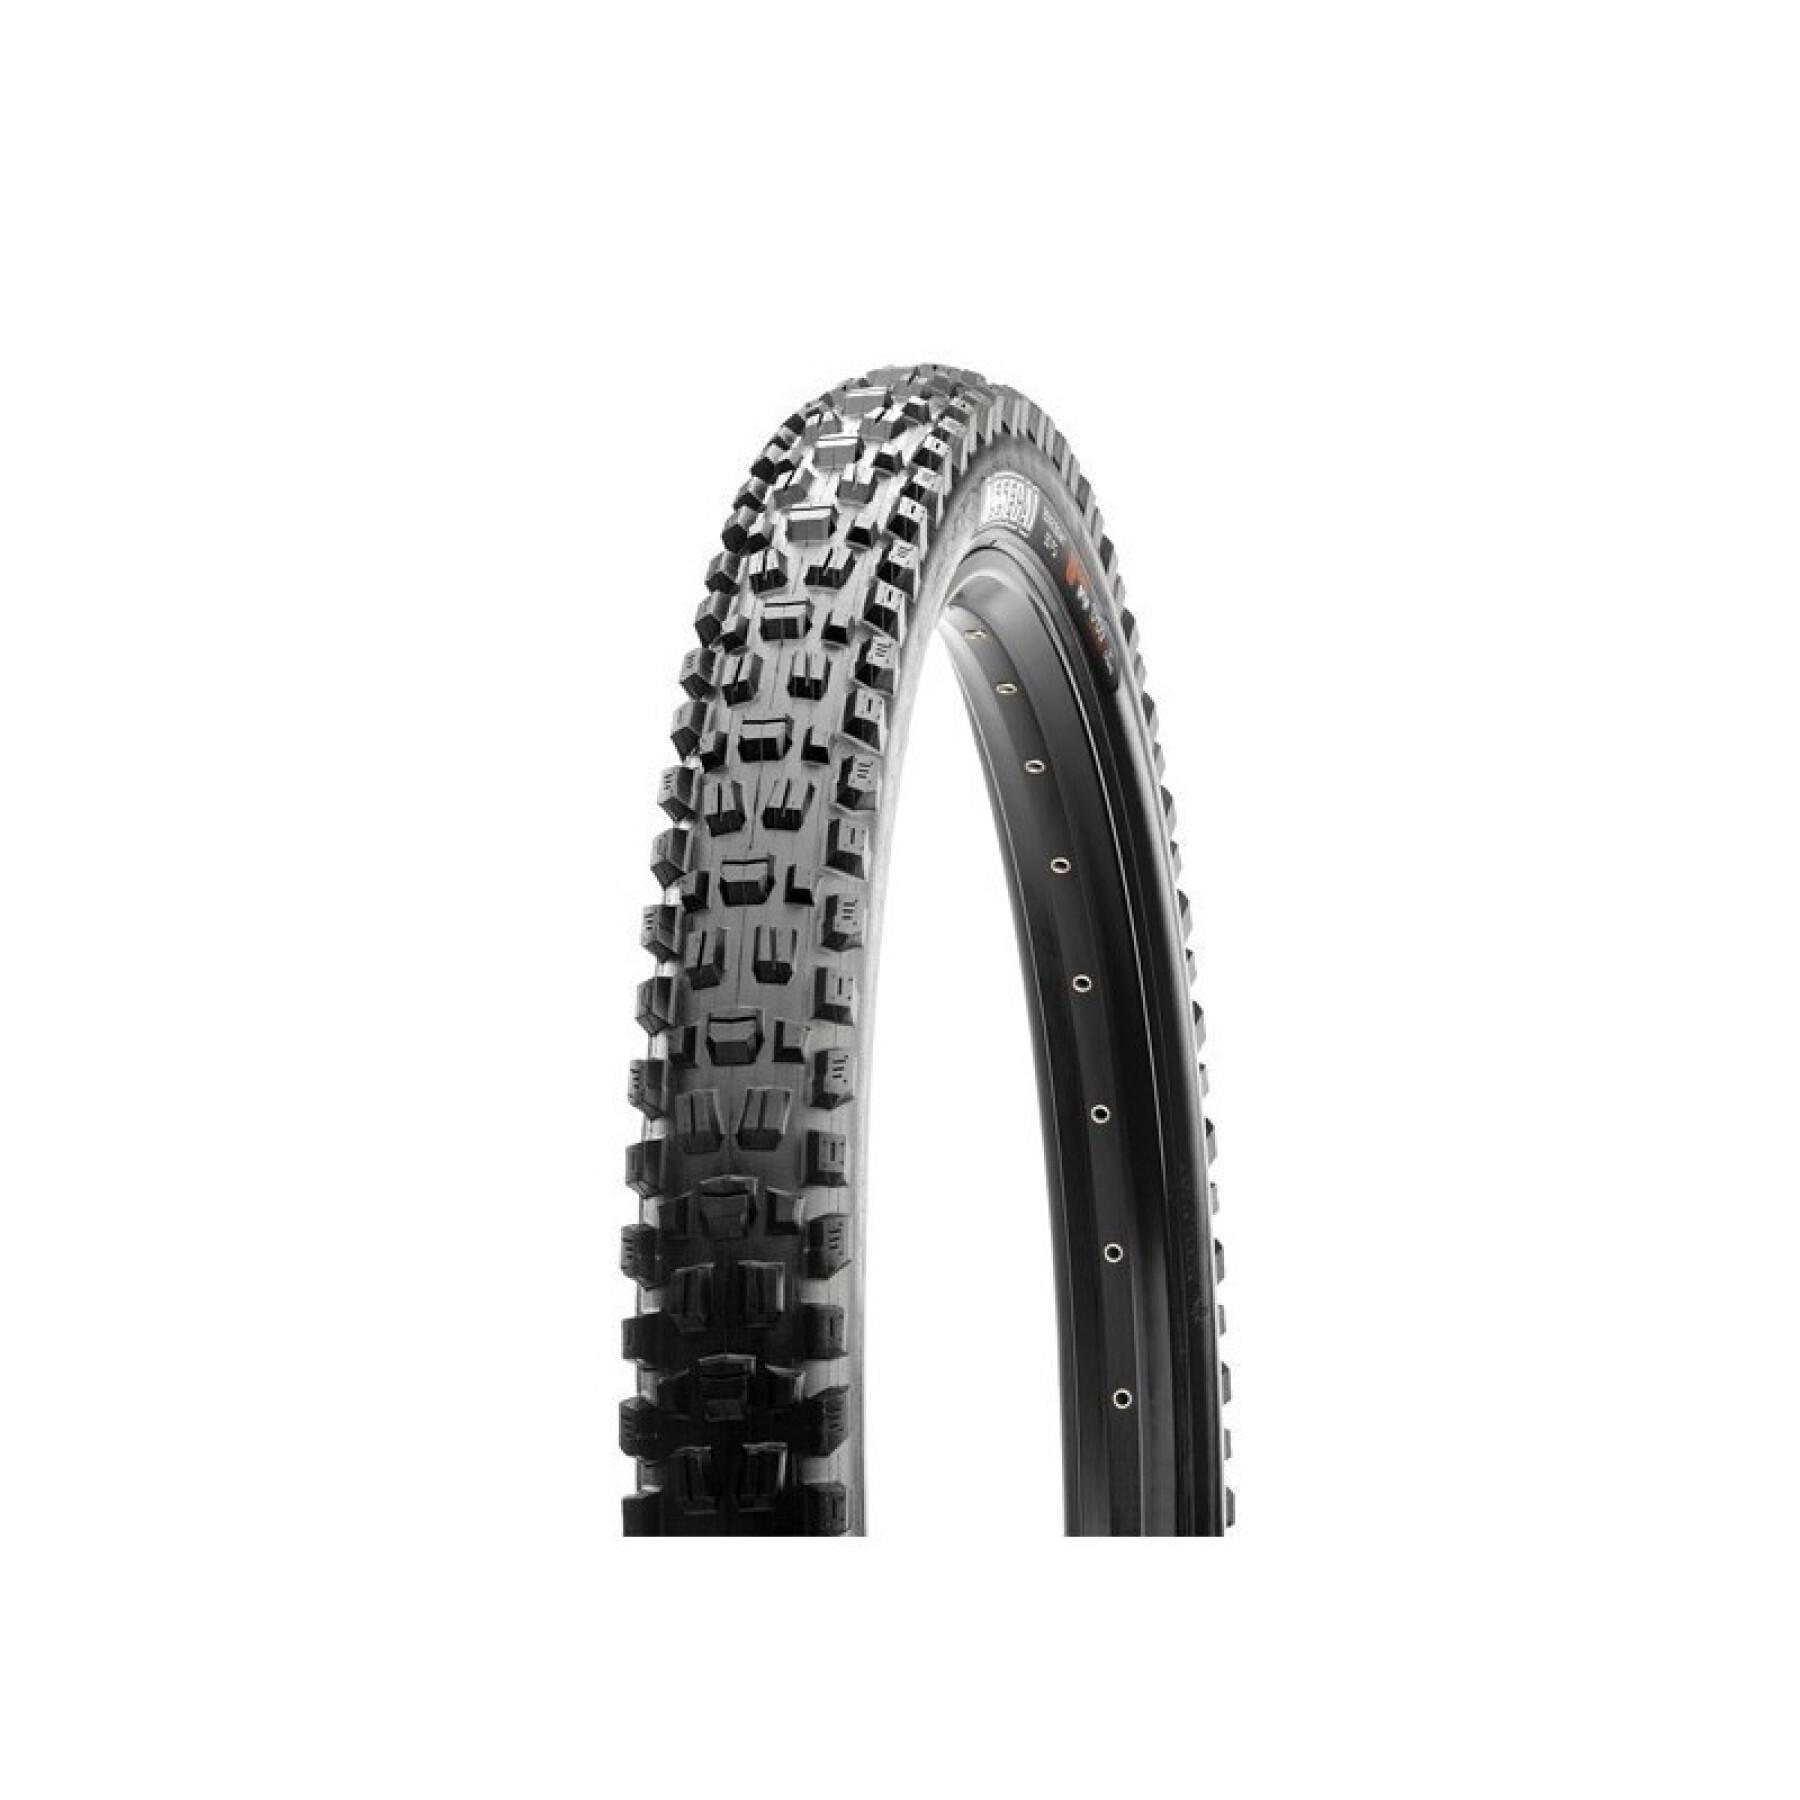 Soft tire Maxxis Assegai WT (Wide Trail) 3C Terra / Exo + / Tubeless Ready